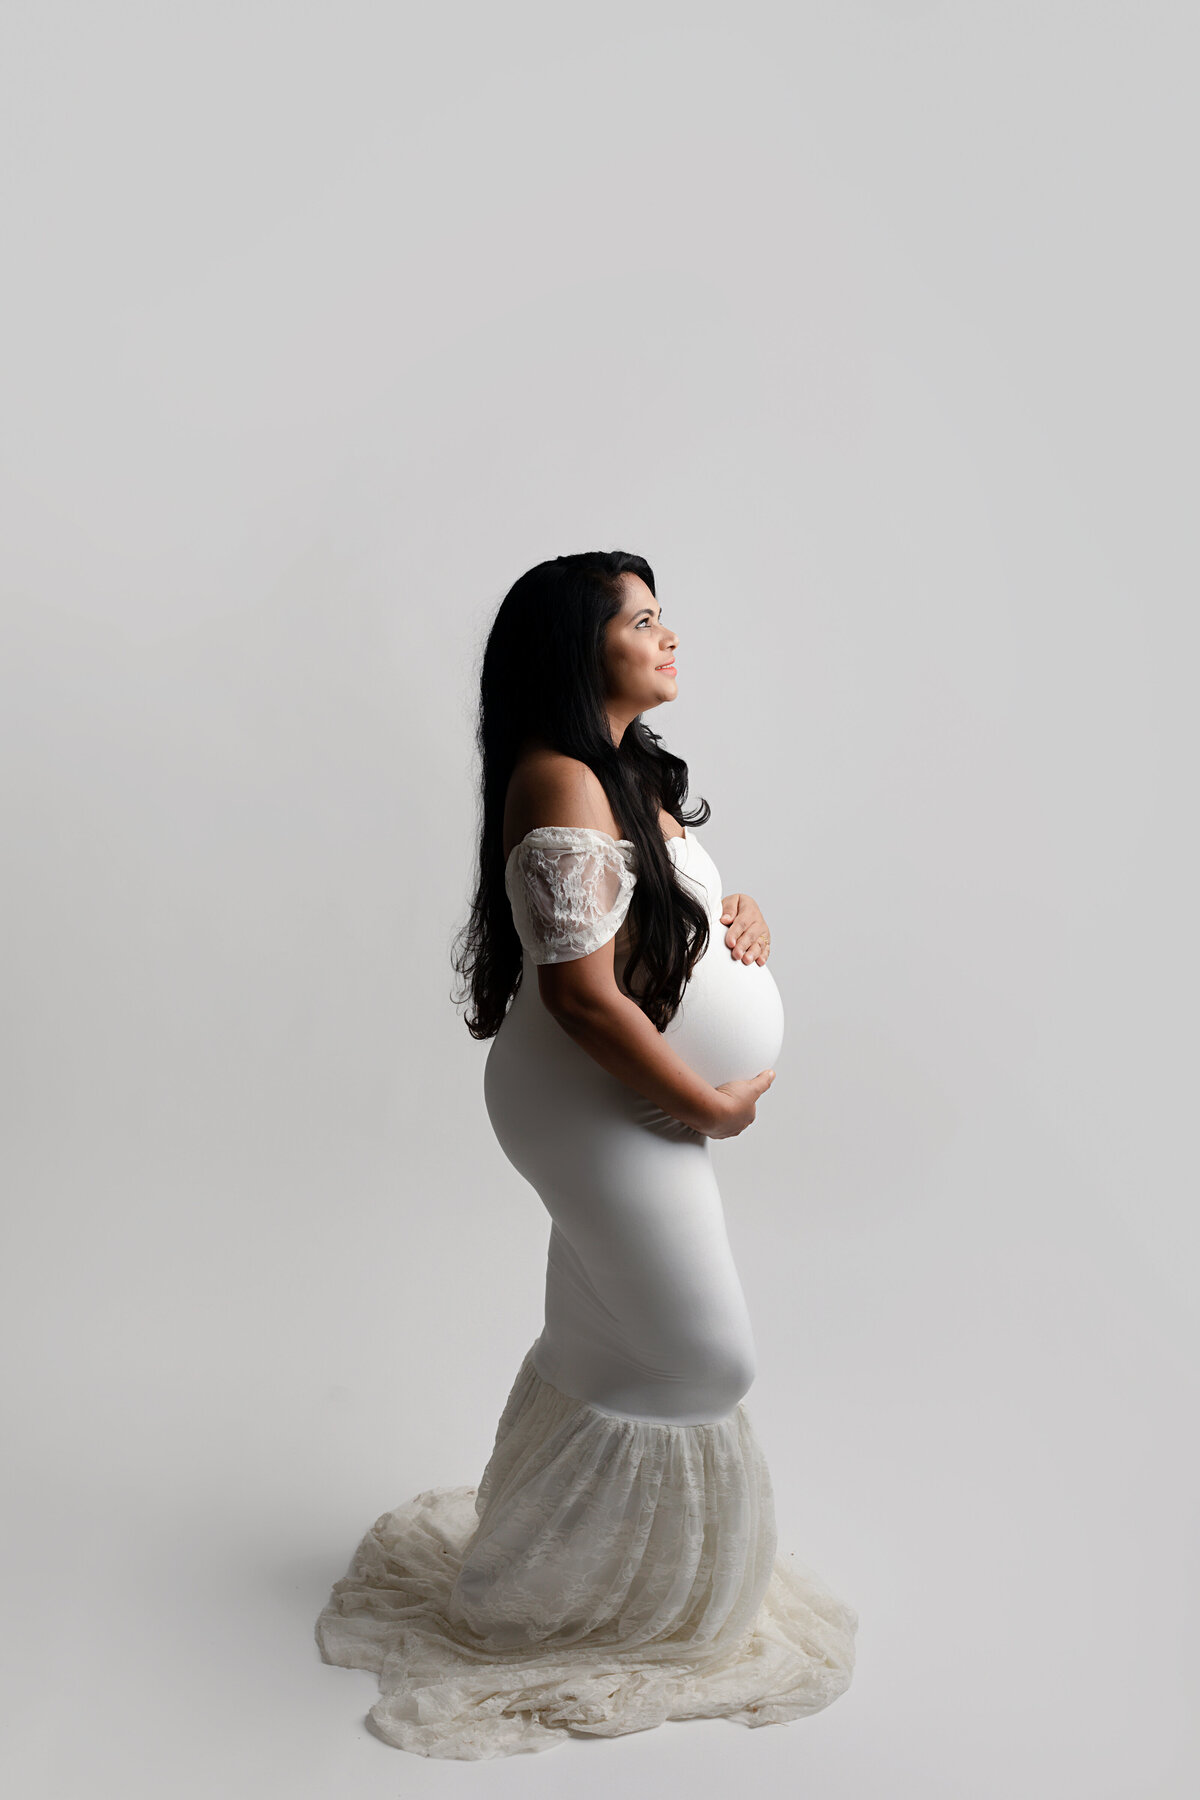 Surrey maternity photographer